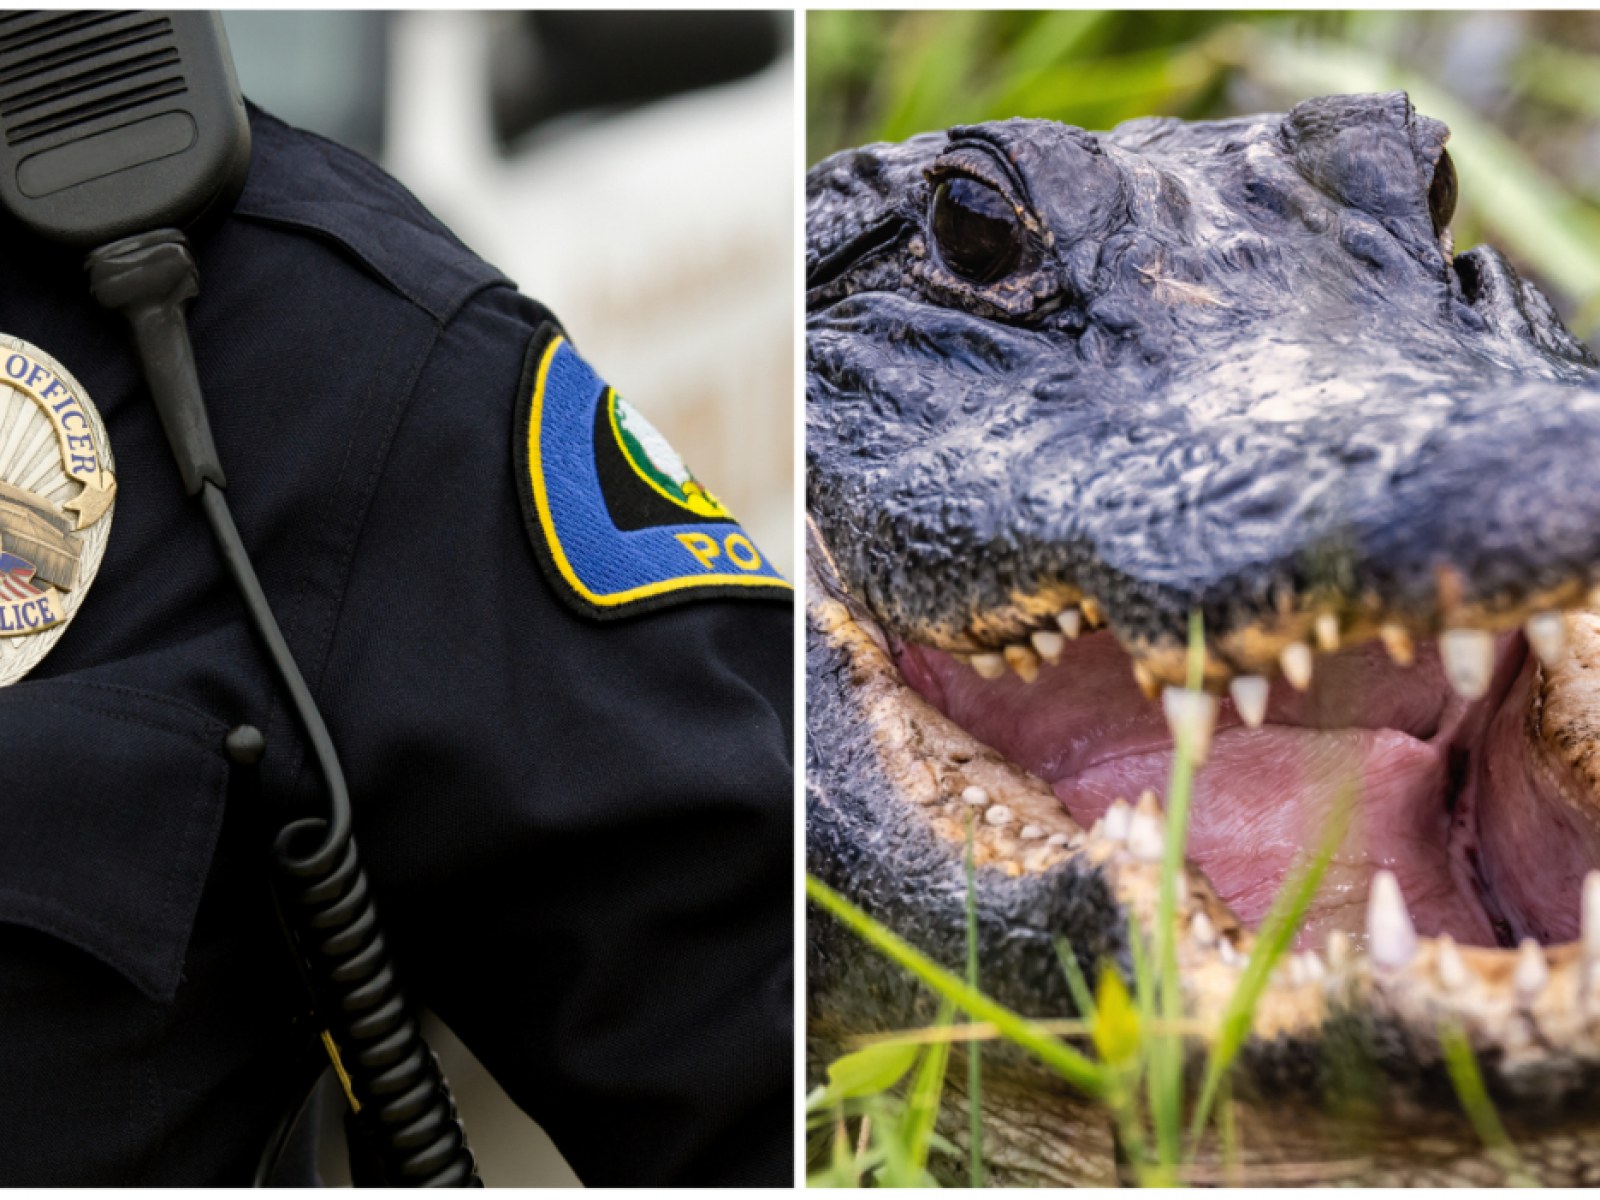 Alligator vs. Police: Watch Louisiana Officer Wrangle Gator in Backyard